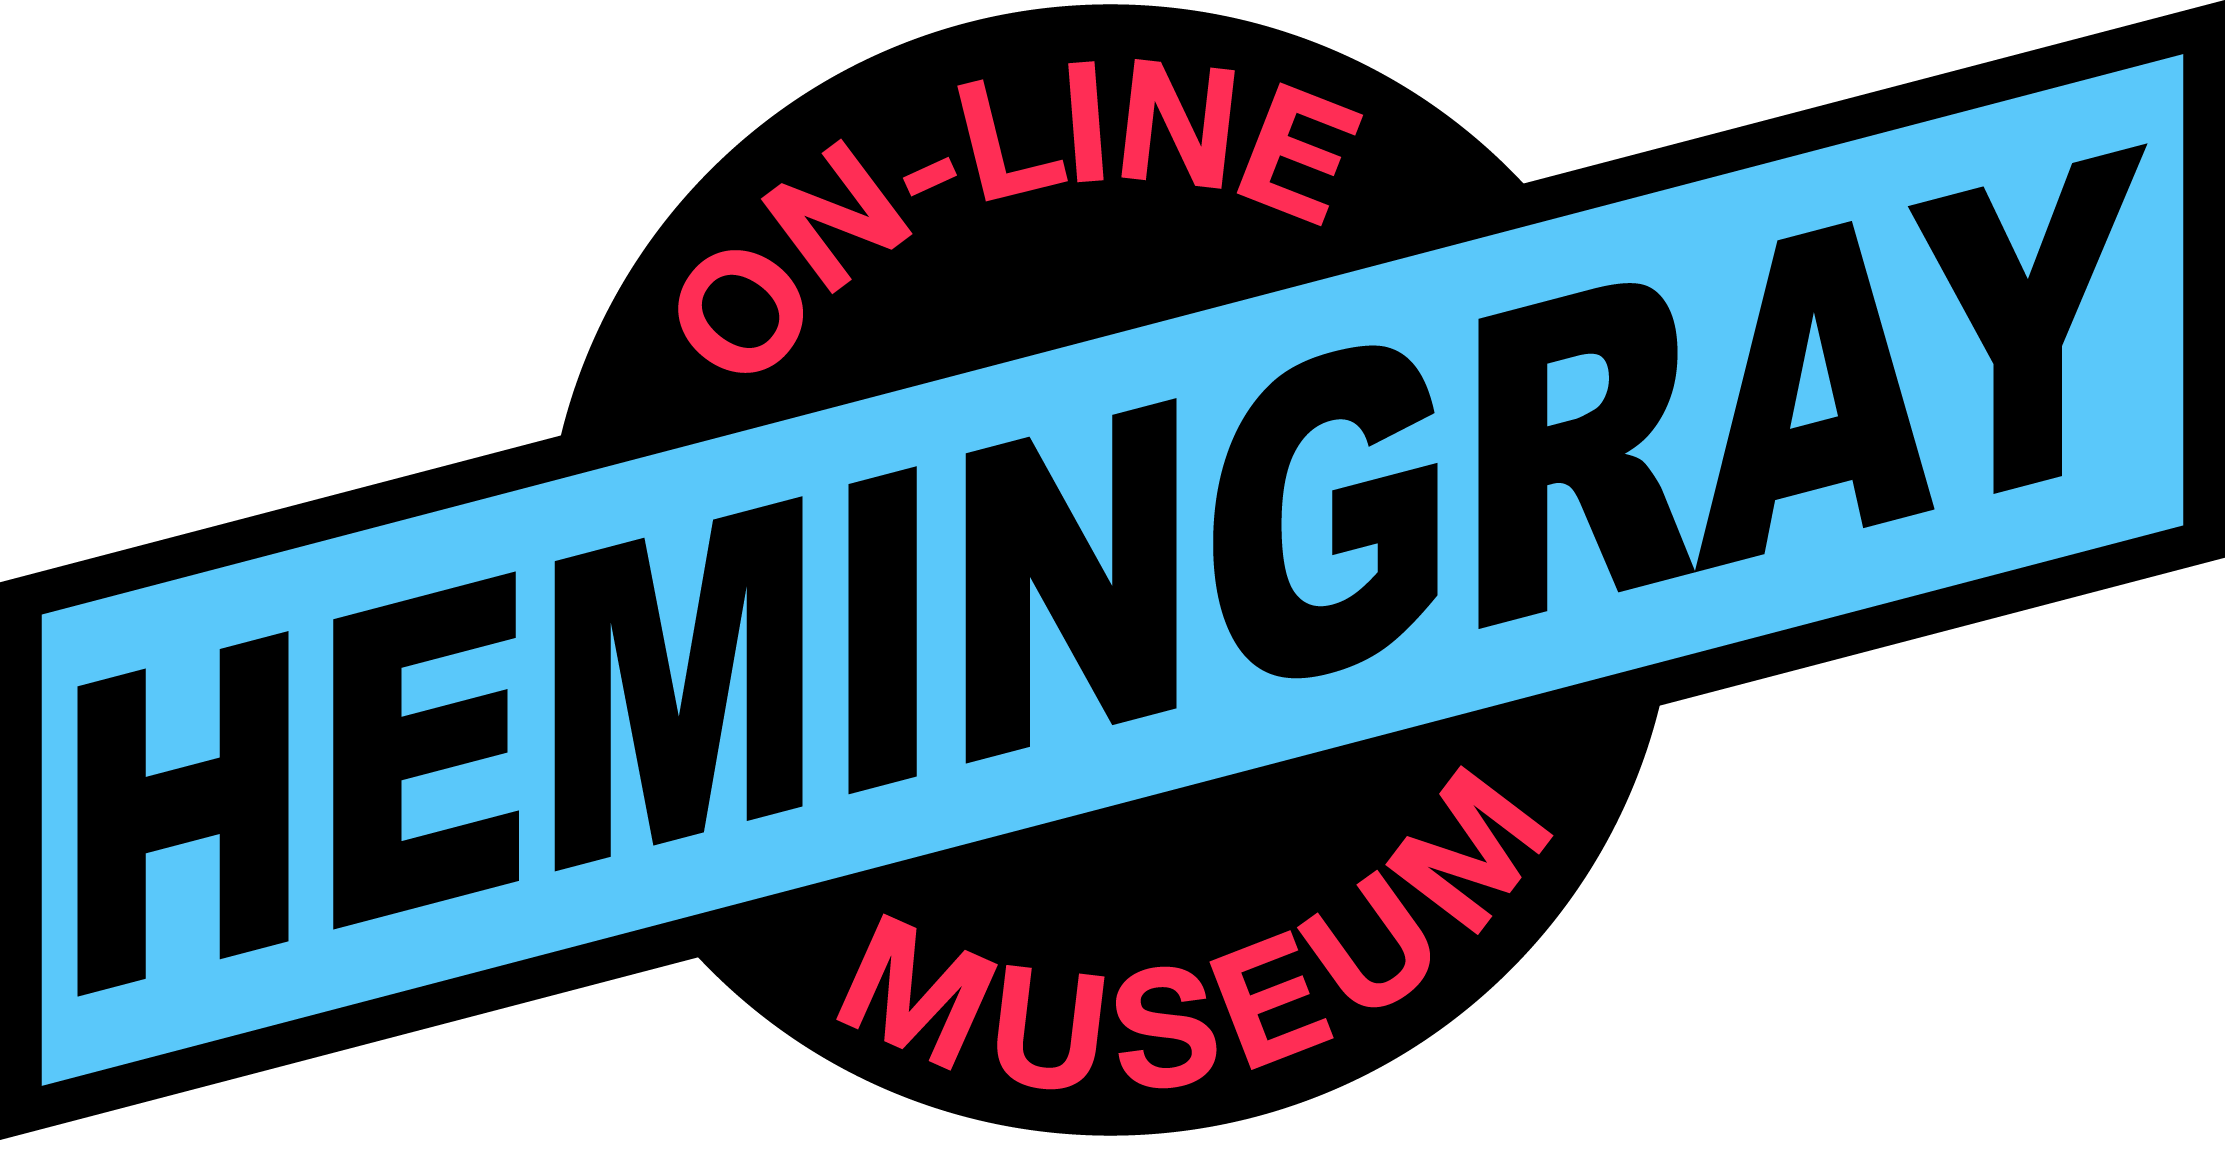 Hemingray On-Line Musueum logo